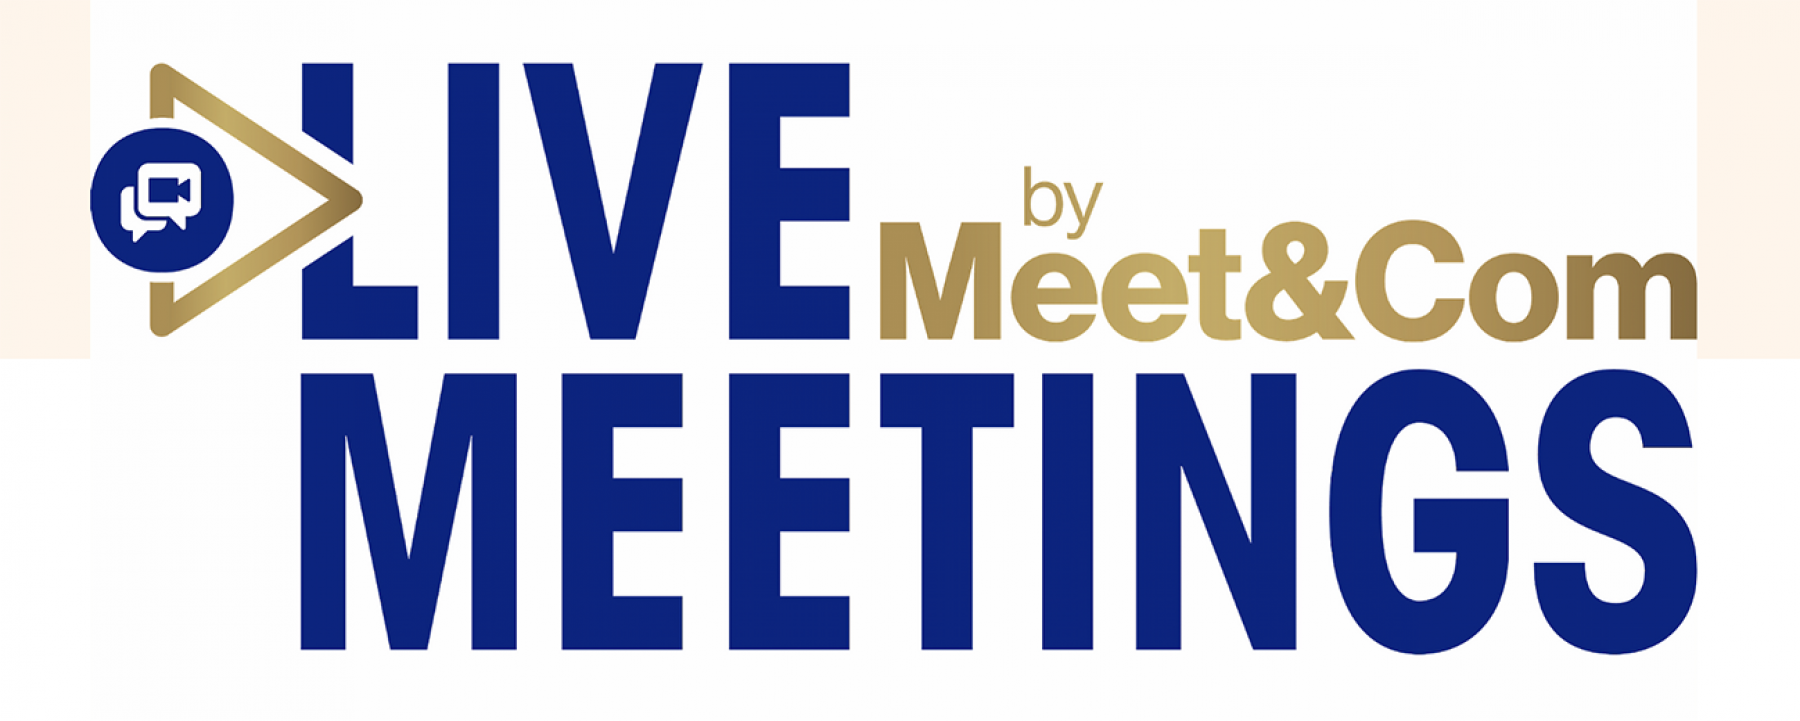 Live meetings organisé le 4 mai 2021 par Meet and Com